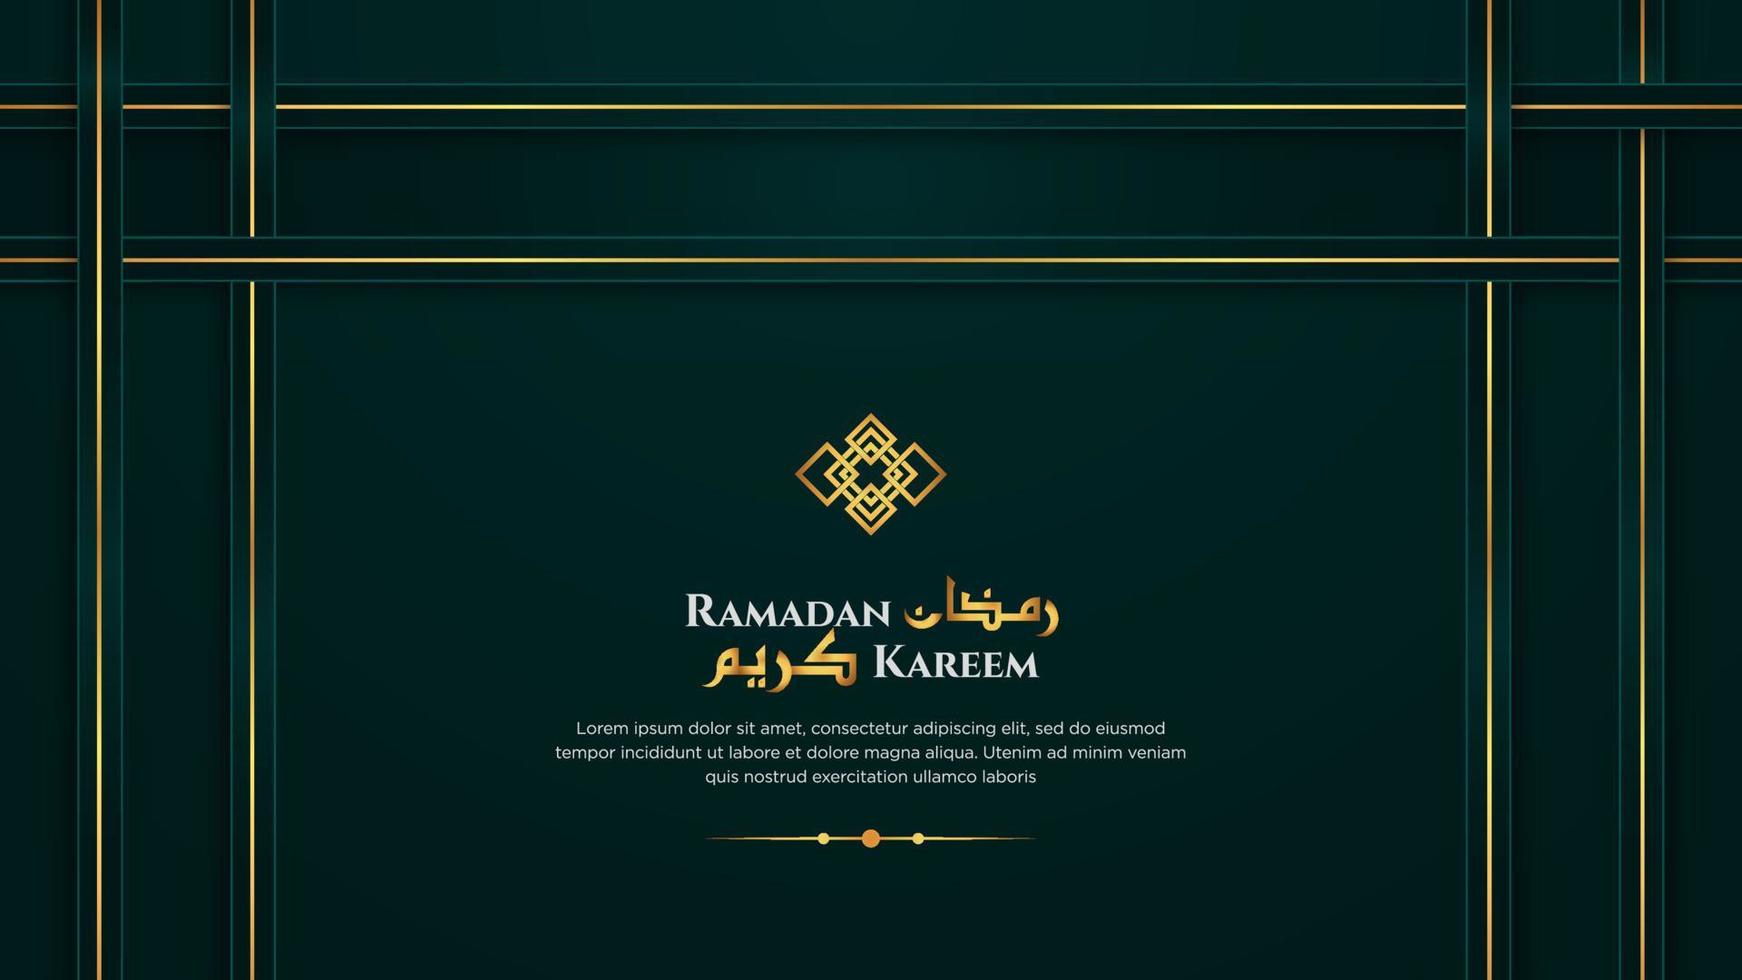 fond de ramadan kareem élégant de luxe vert foncé avec calligraphie arabe, bougies vecteur